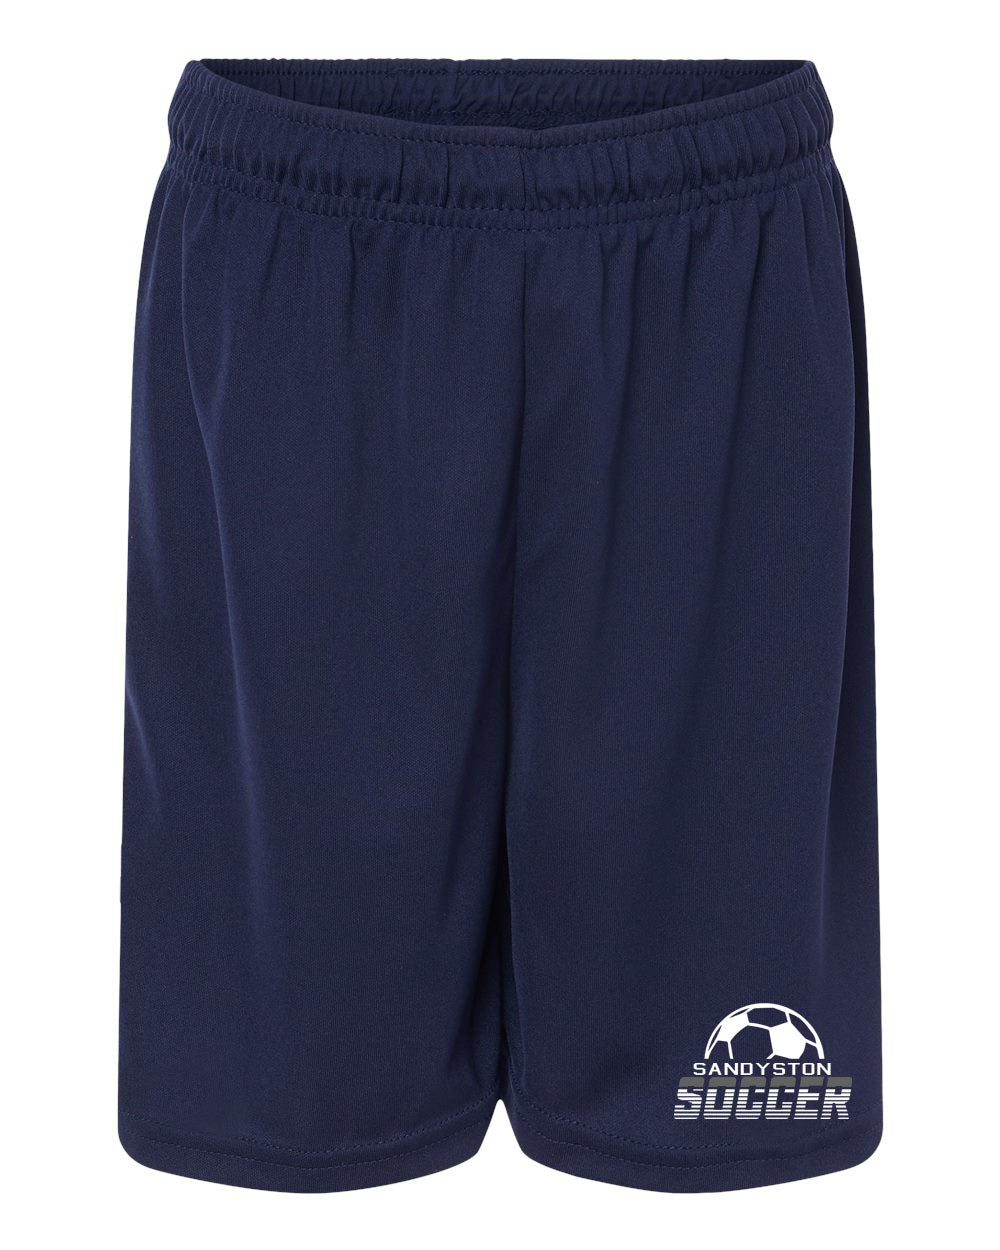 Sandyston Soccer Design 3 Shorts